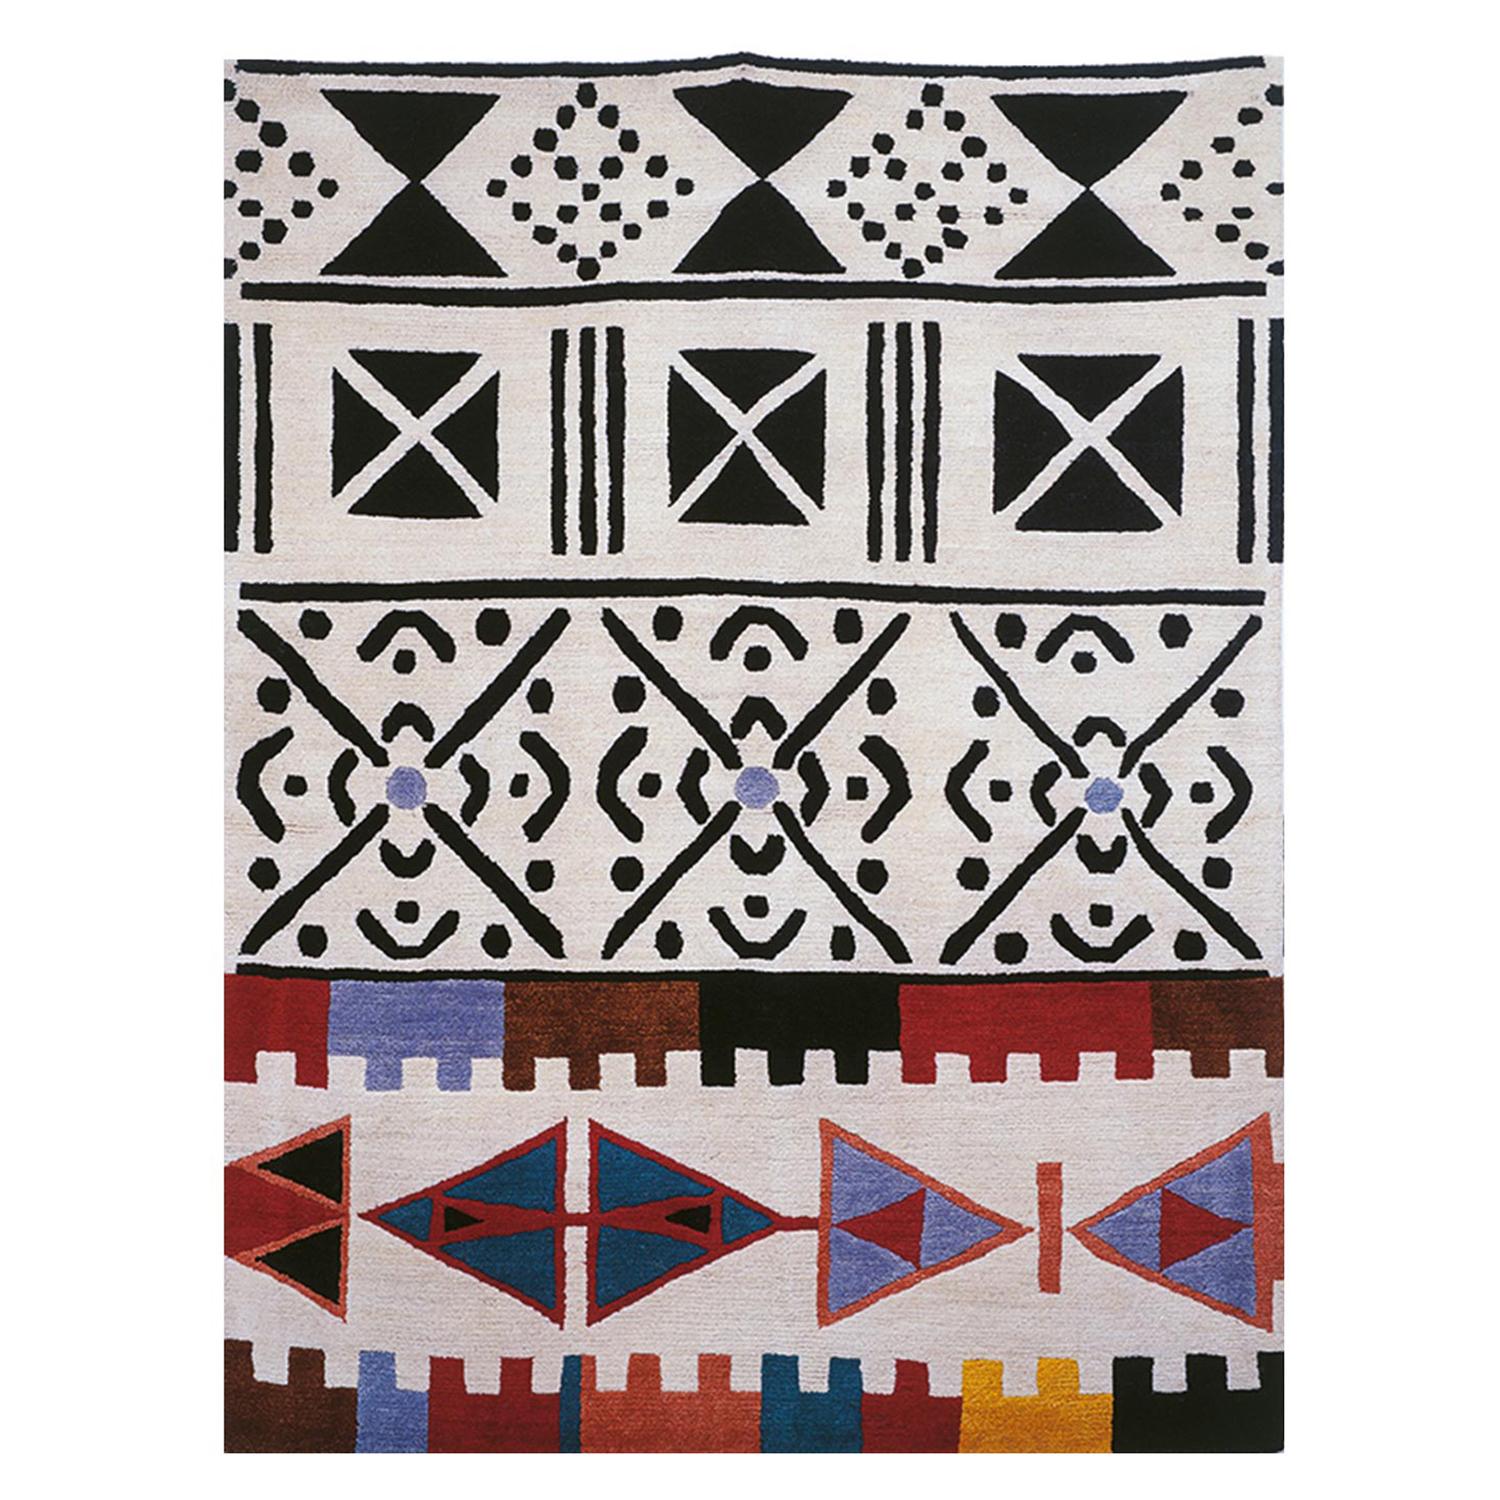 Ground Line 2 Woollen Carpet by Nanda Vigo for Post Design Collection/Memphis